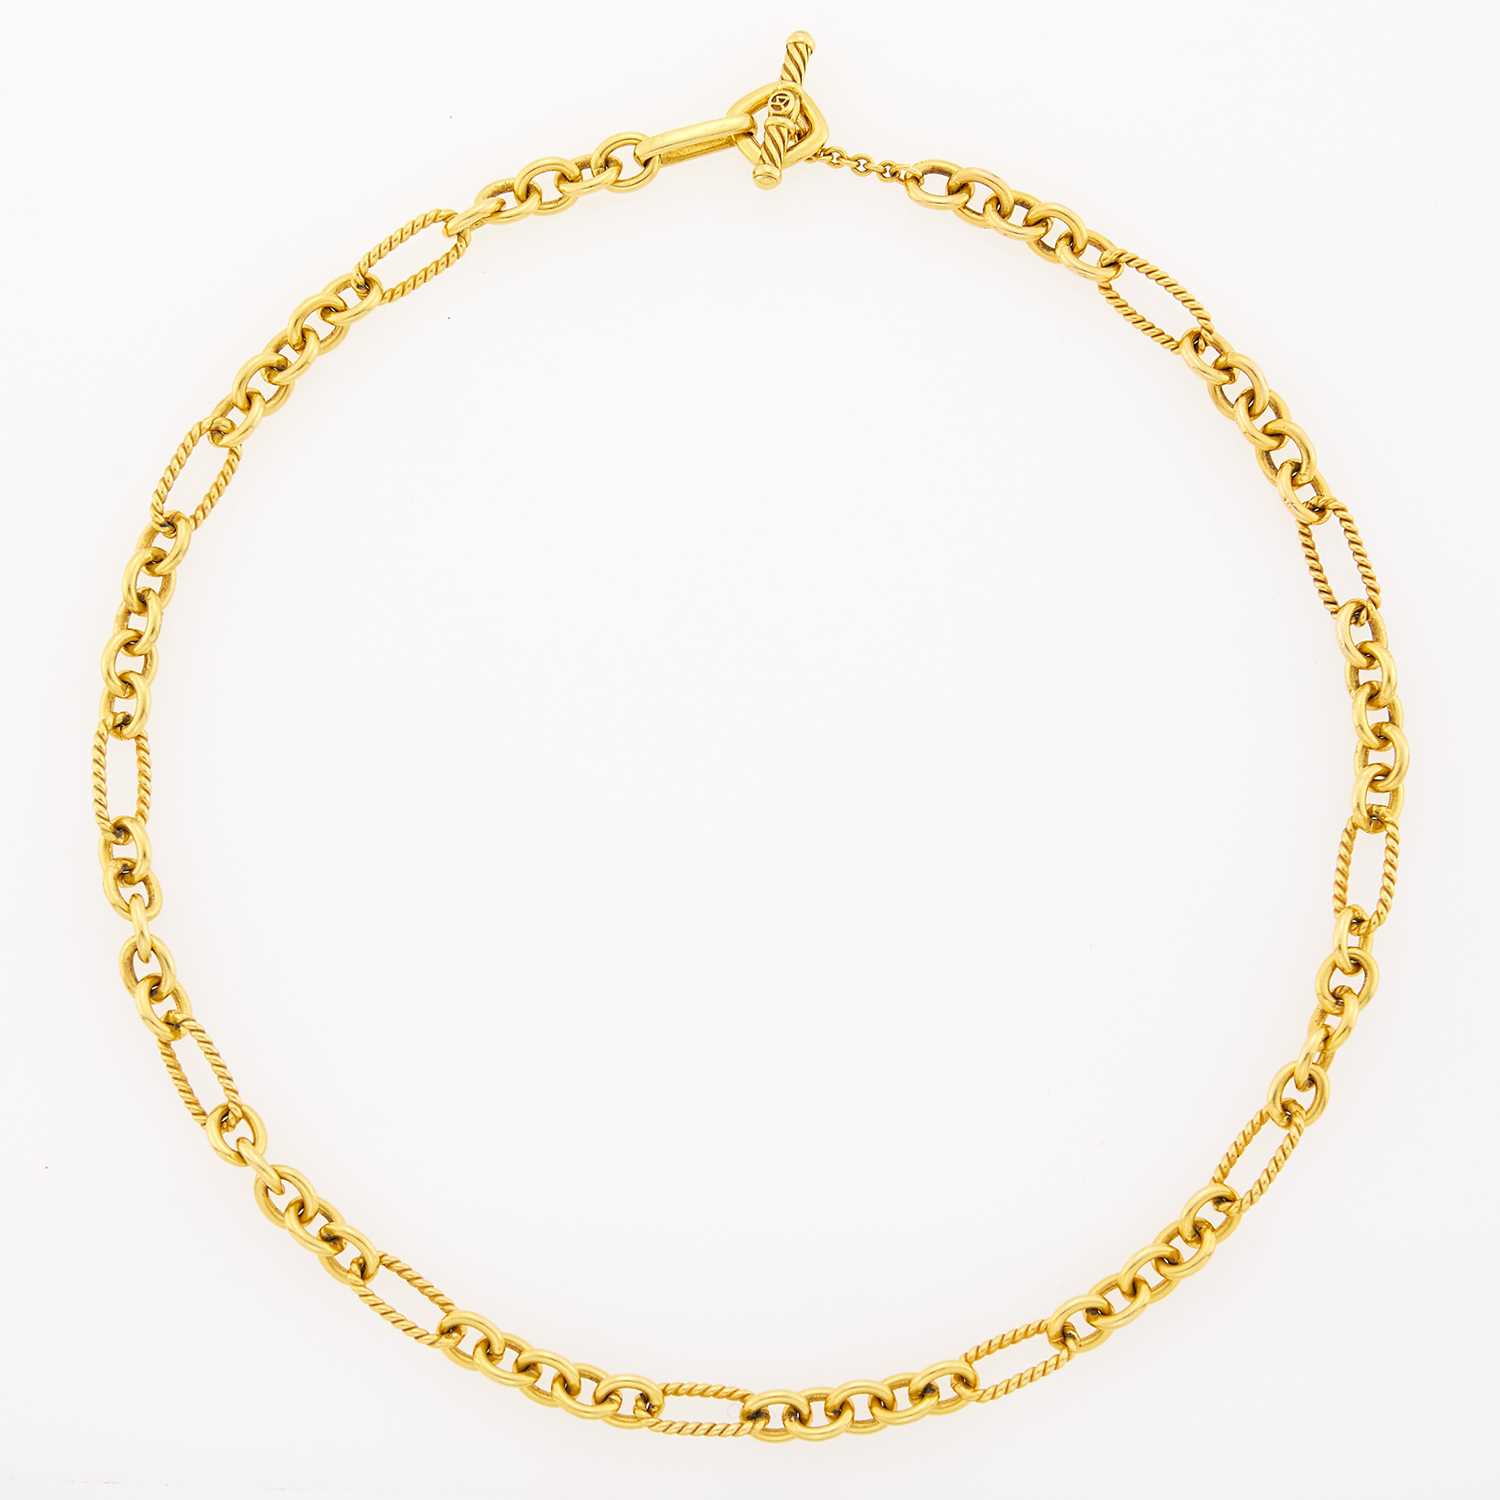 Lot 2007 - David Yurman Gold Chain Link Necklace